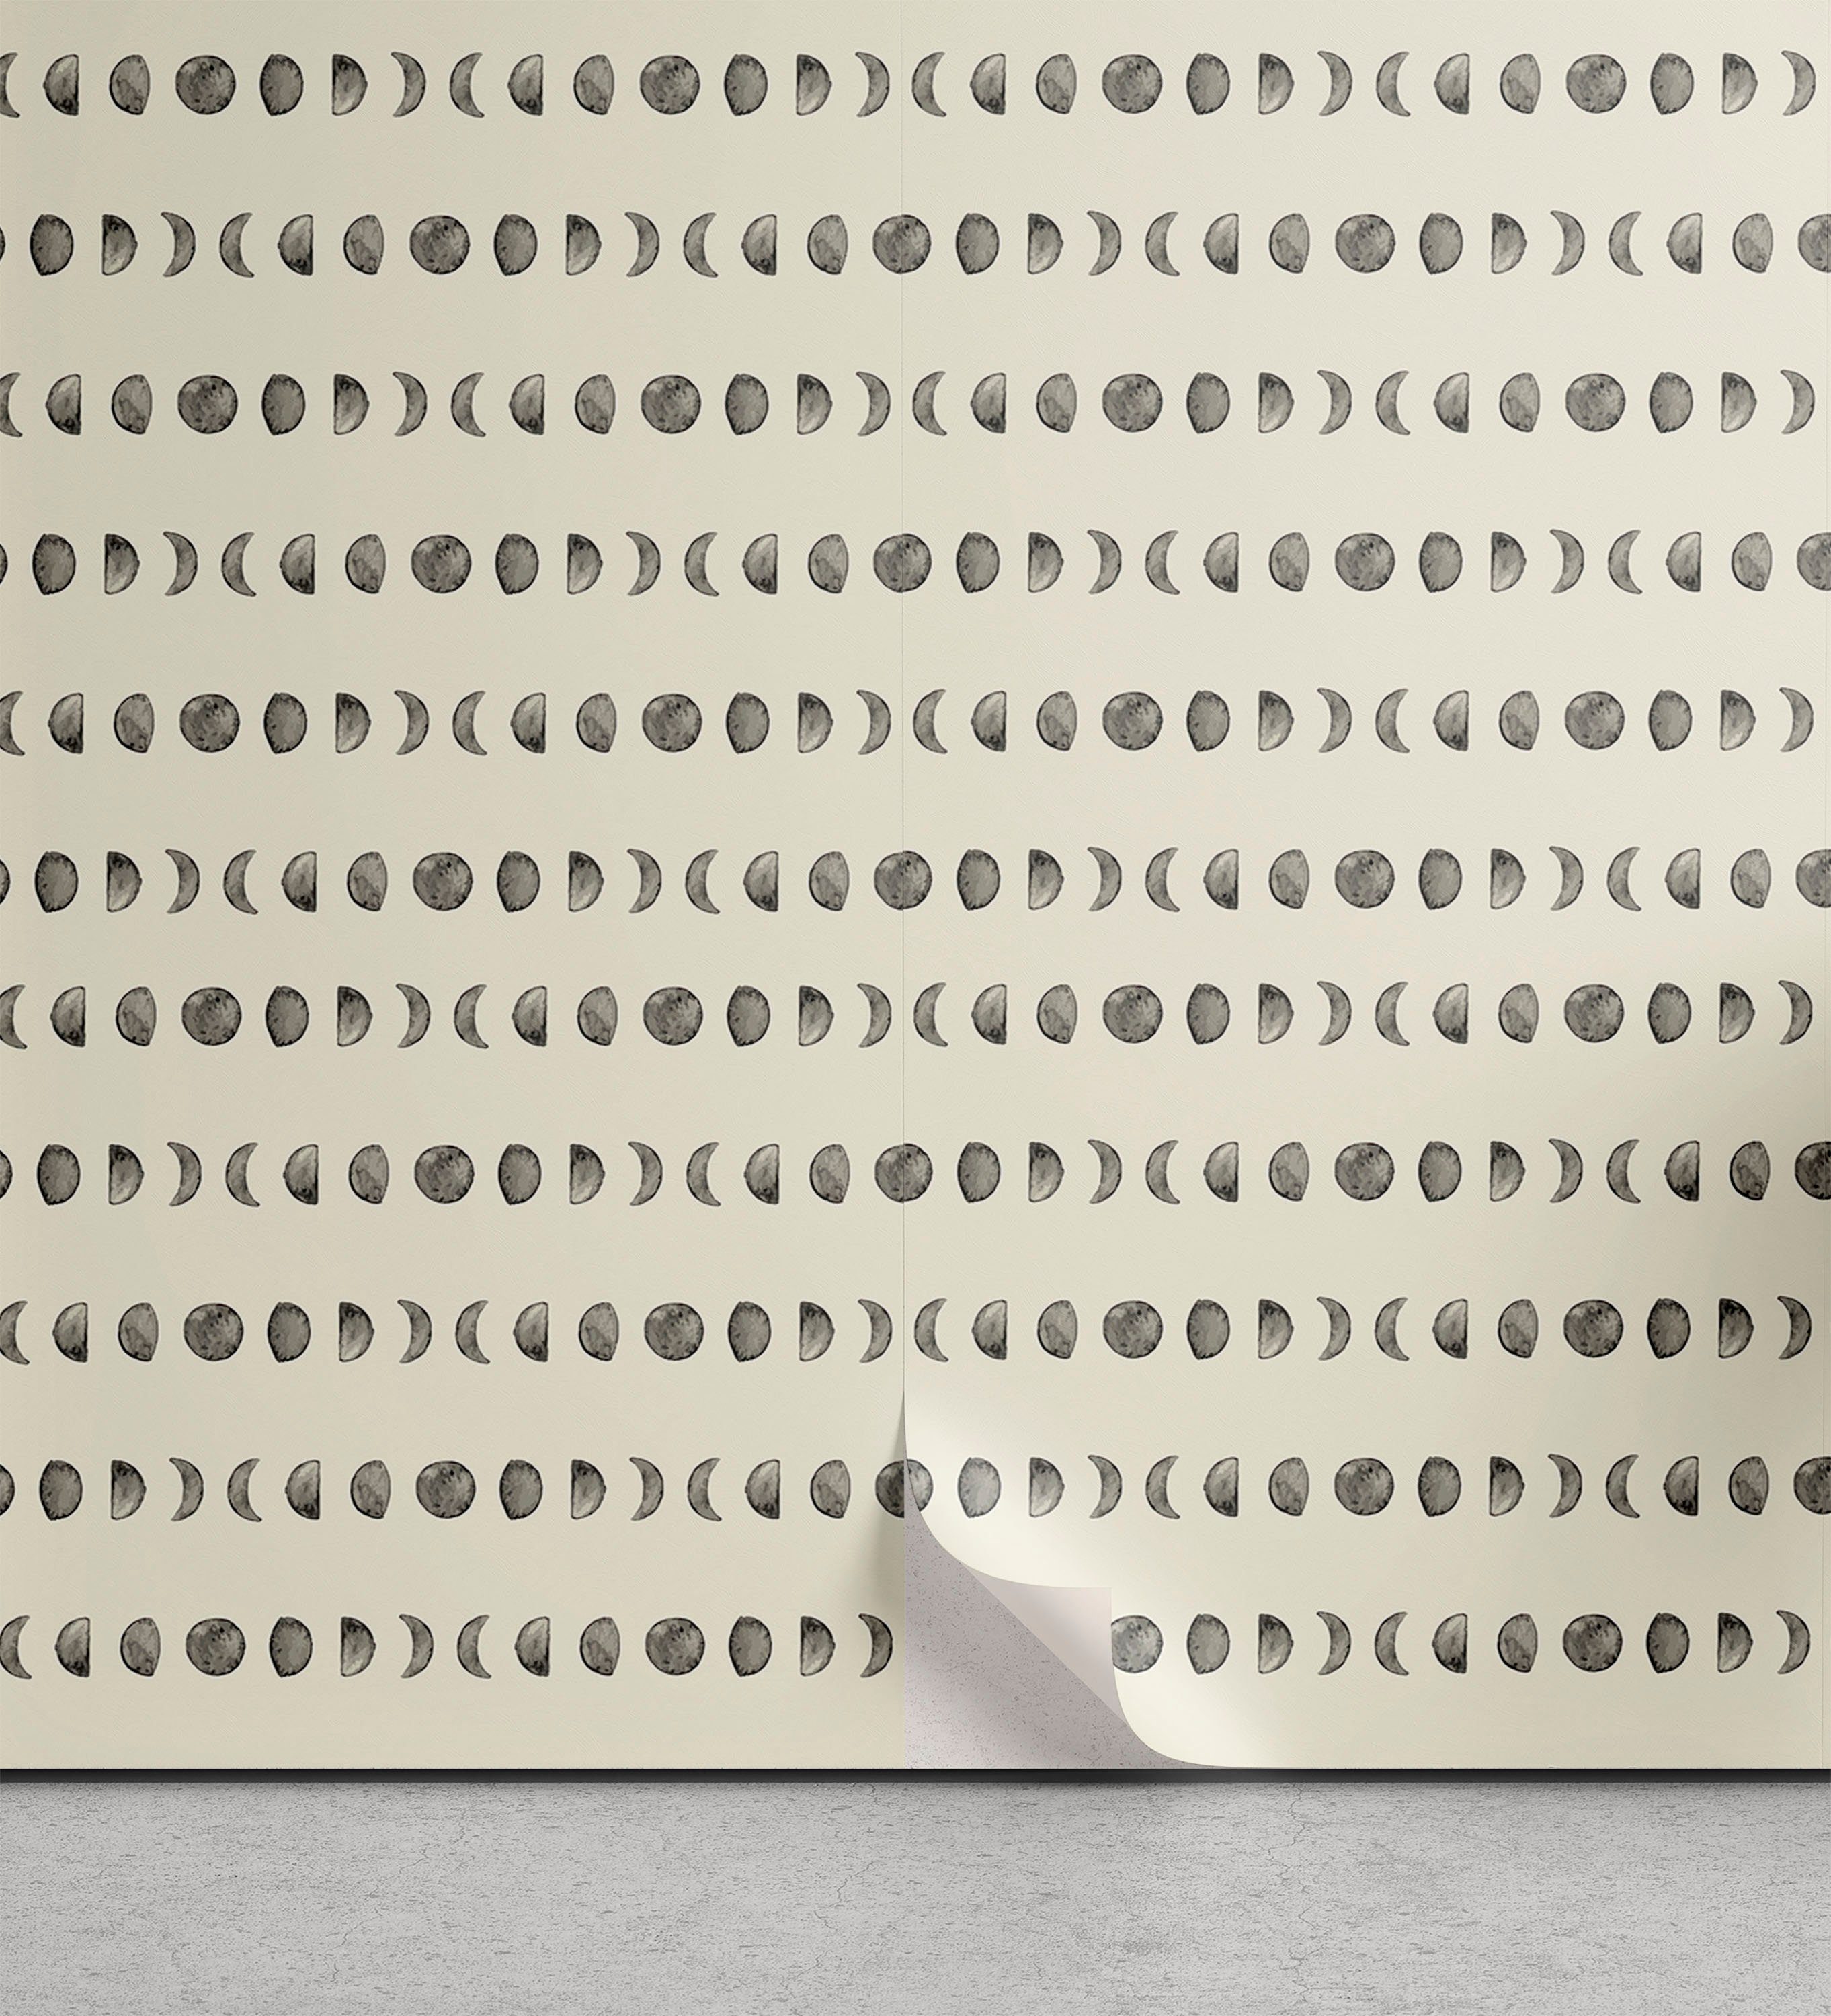 Abakuhaus Vinyltapete selbstklebendes Wohnzimmer Küchenakzent, Mond Moderne Minimal Mondphasen